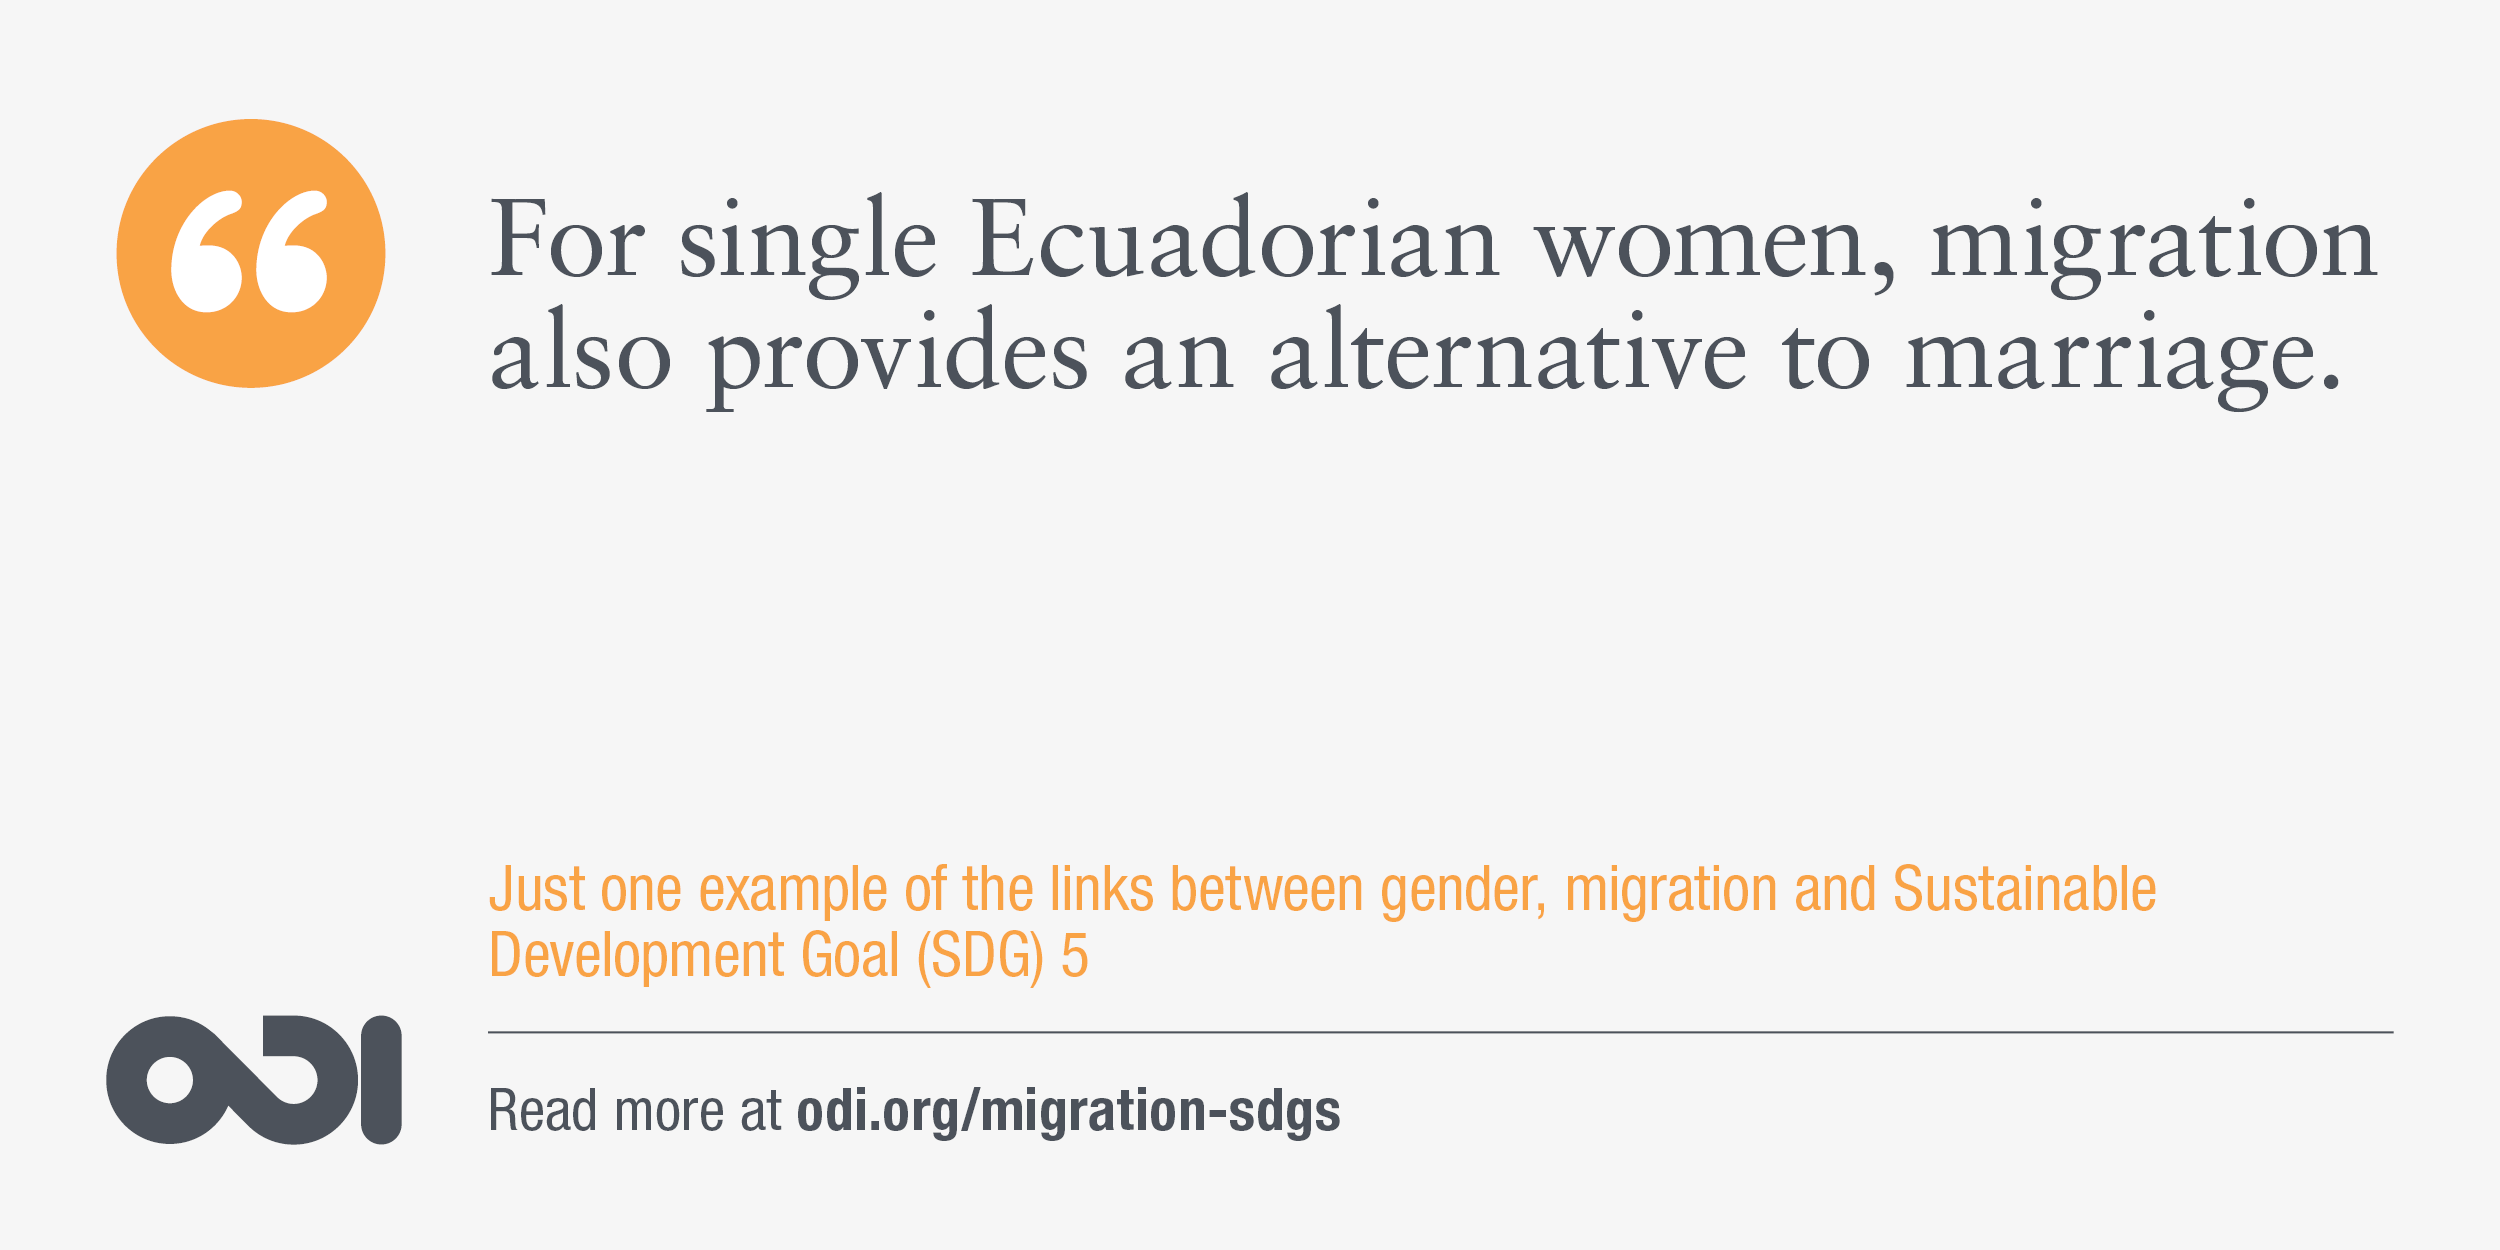 The links between gender, migration and SDG 5.